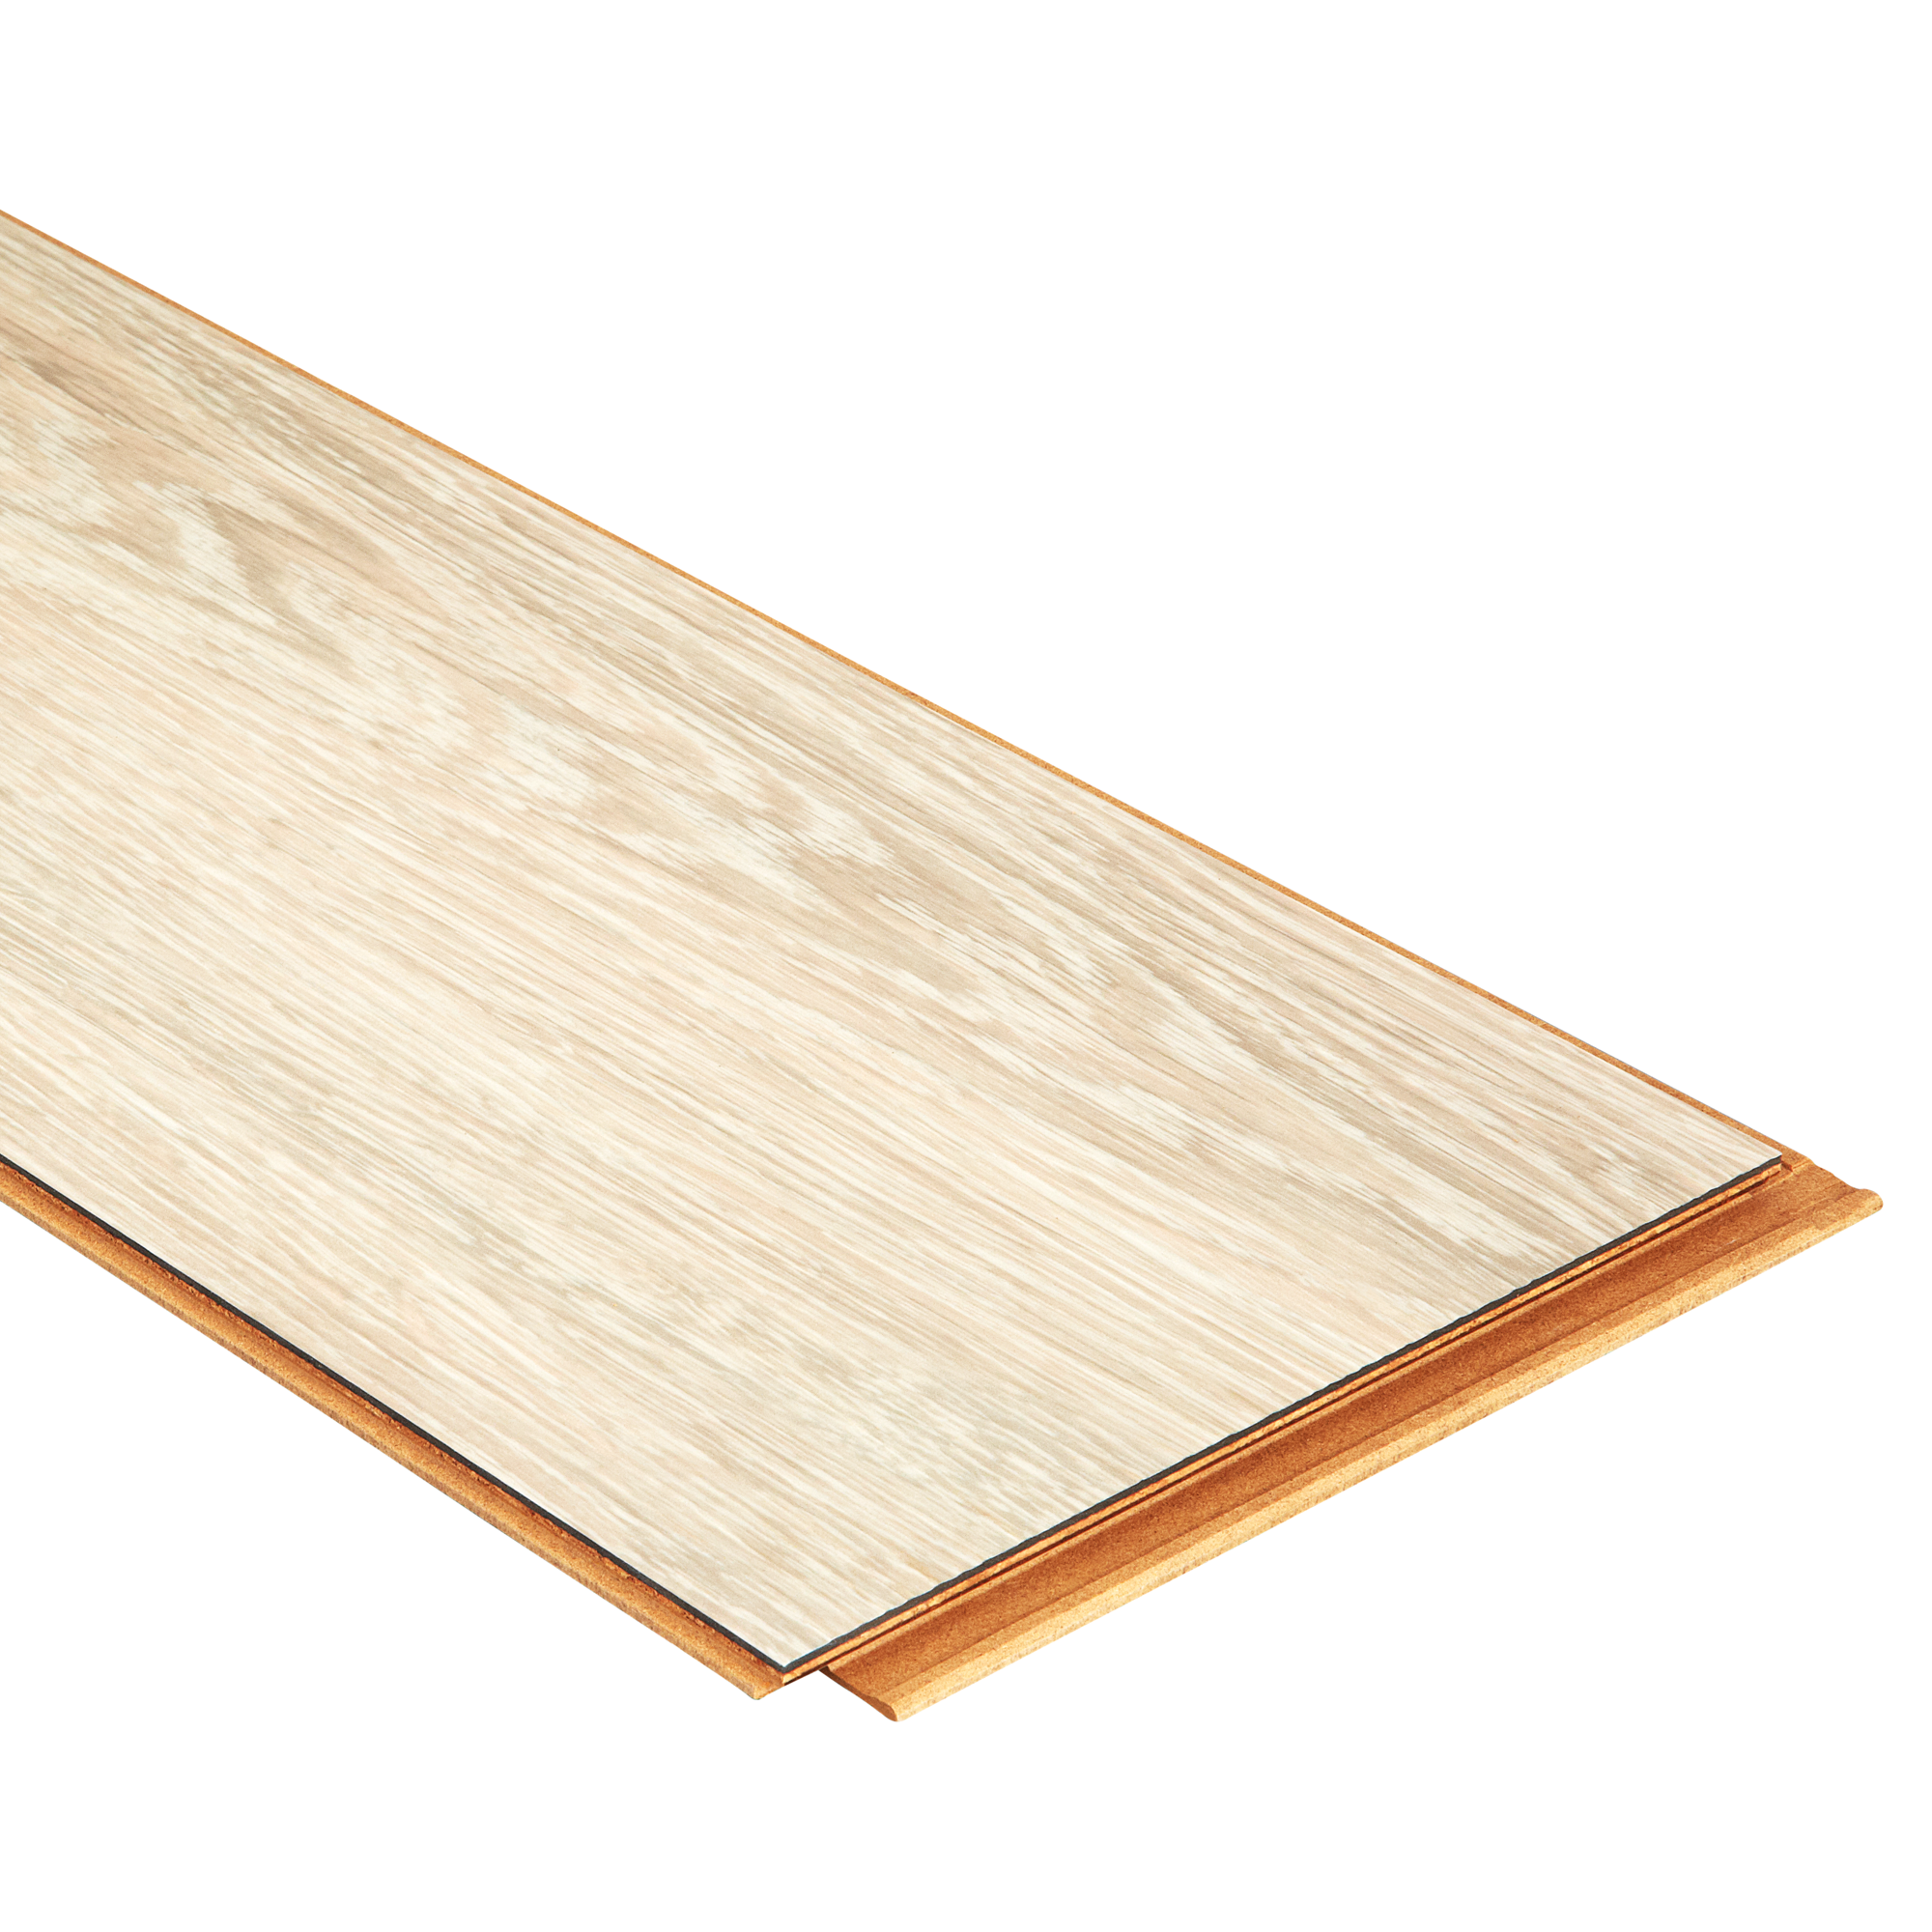 Vinylboden 'Comfort' Polar Oak beige grau 10,5 mm + product picture